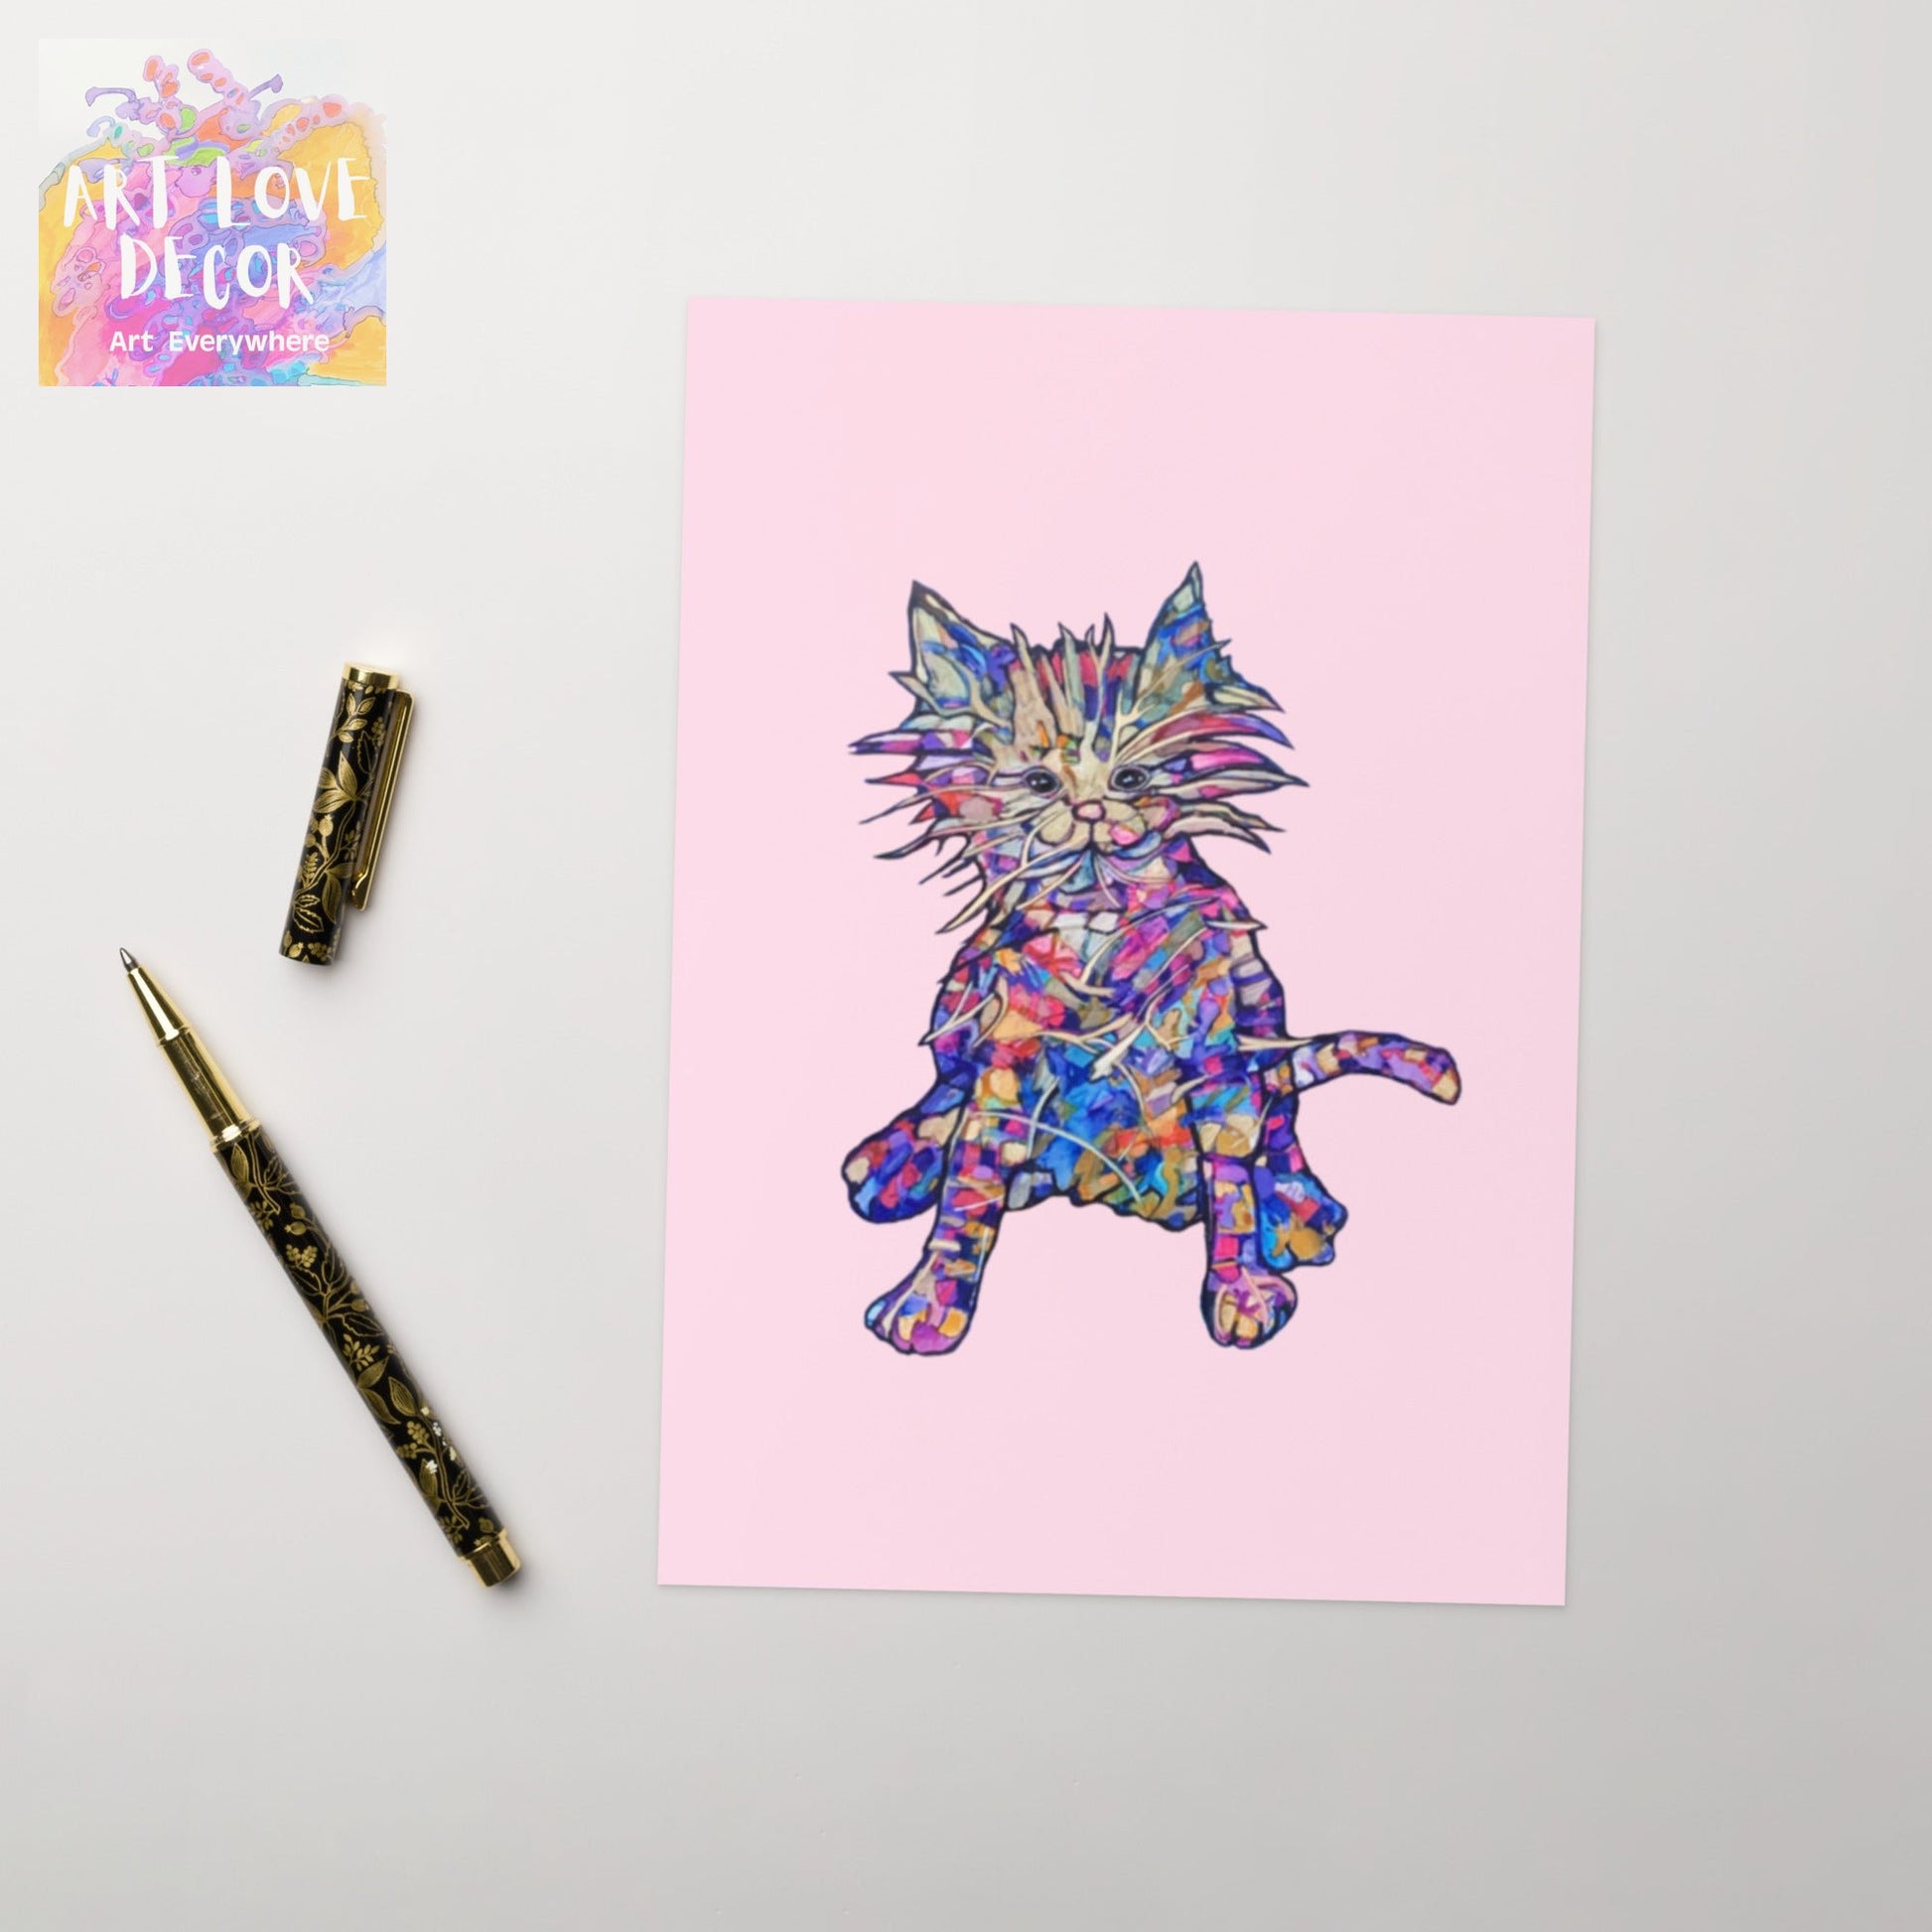 Busy Cat Greeting card - Art Love Decor